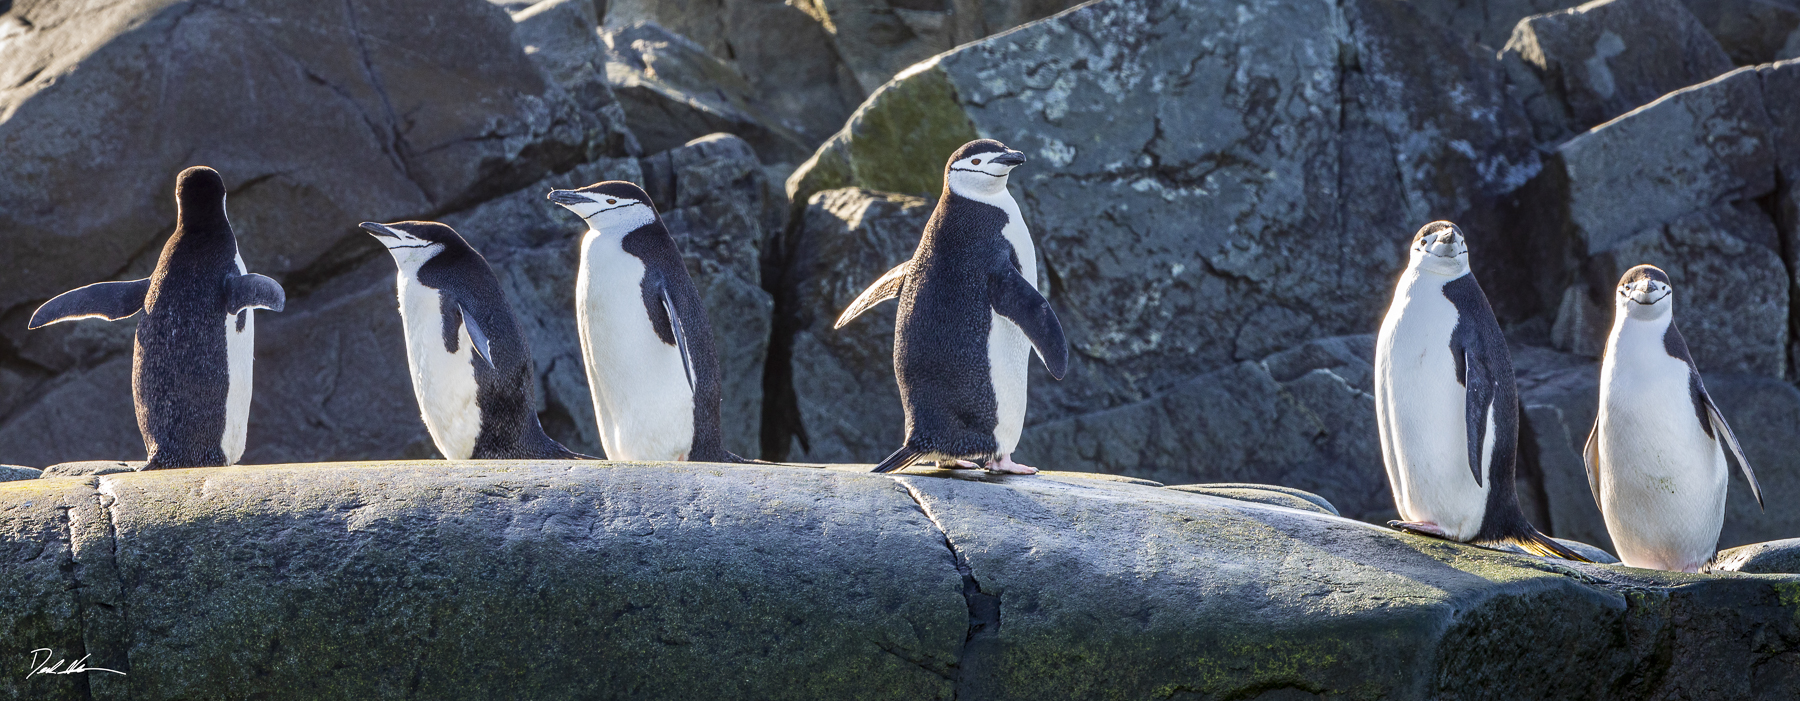 Chinstrap penguins on rocks